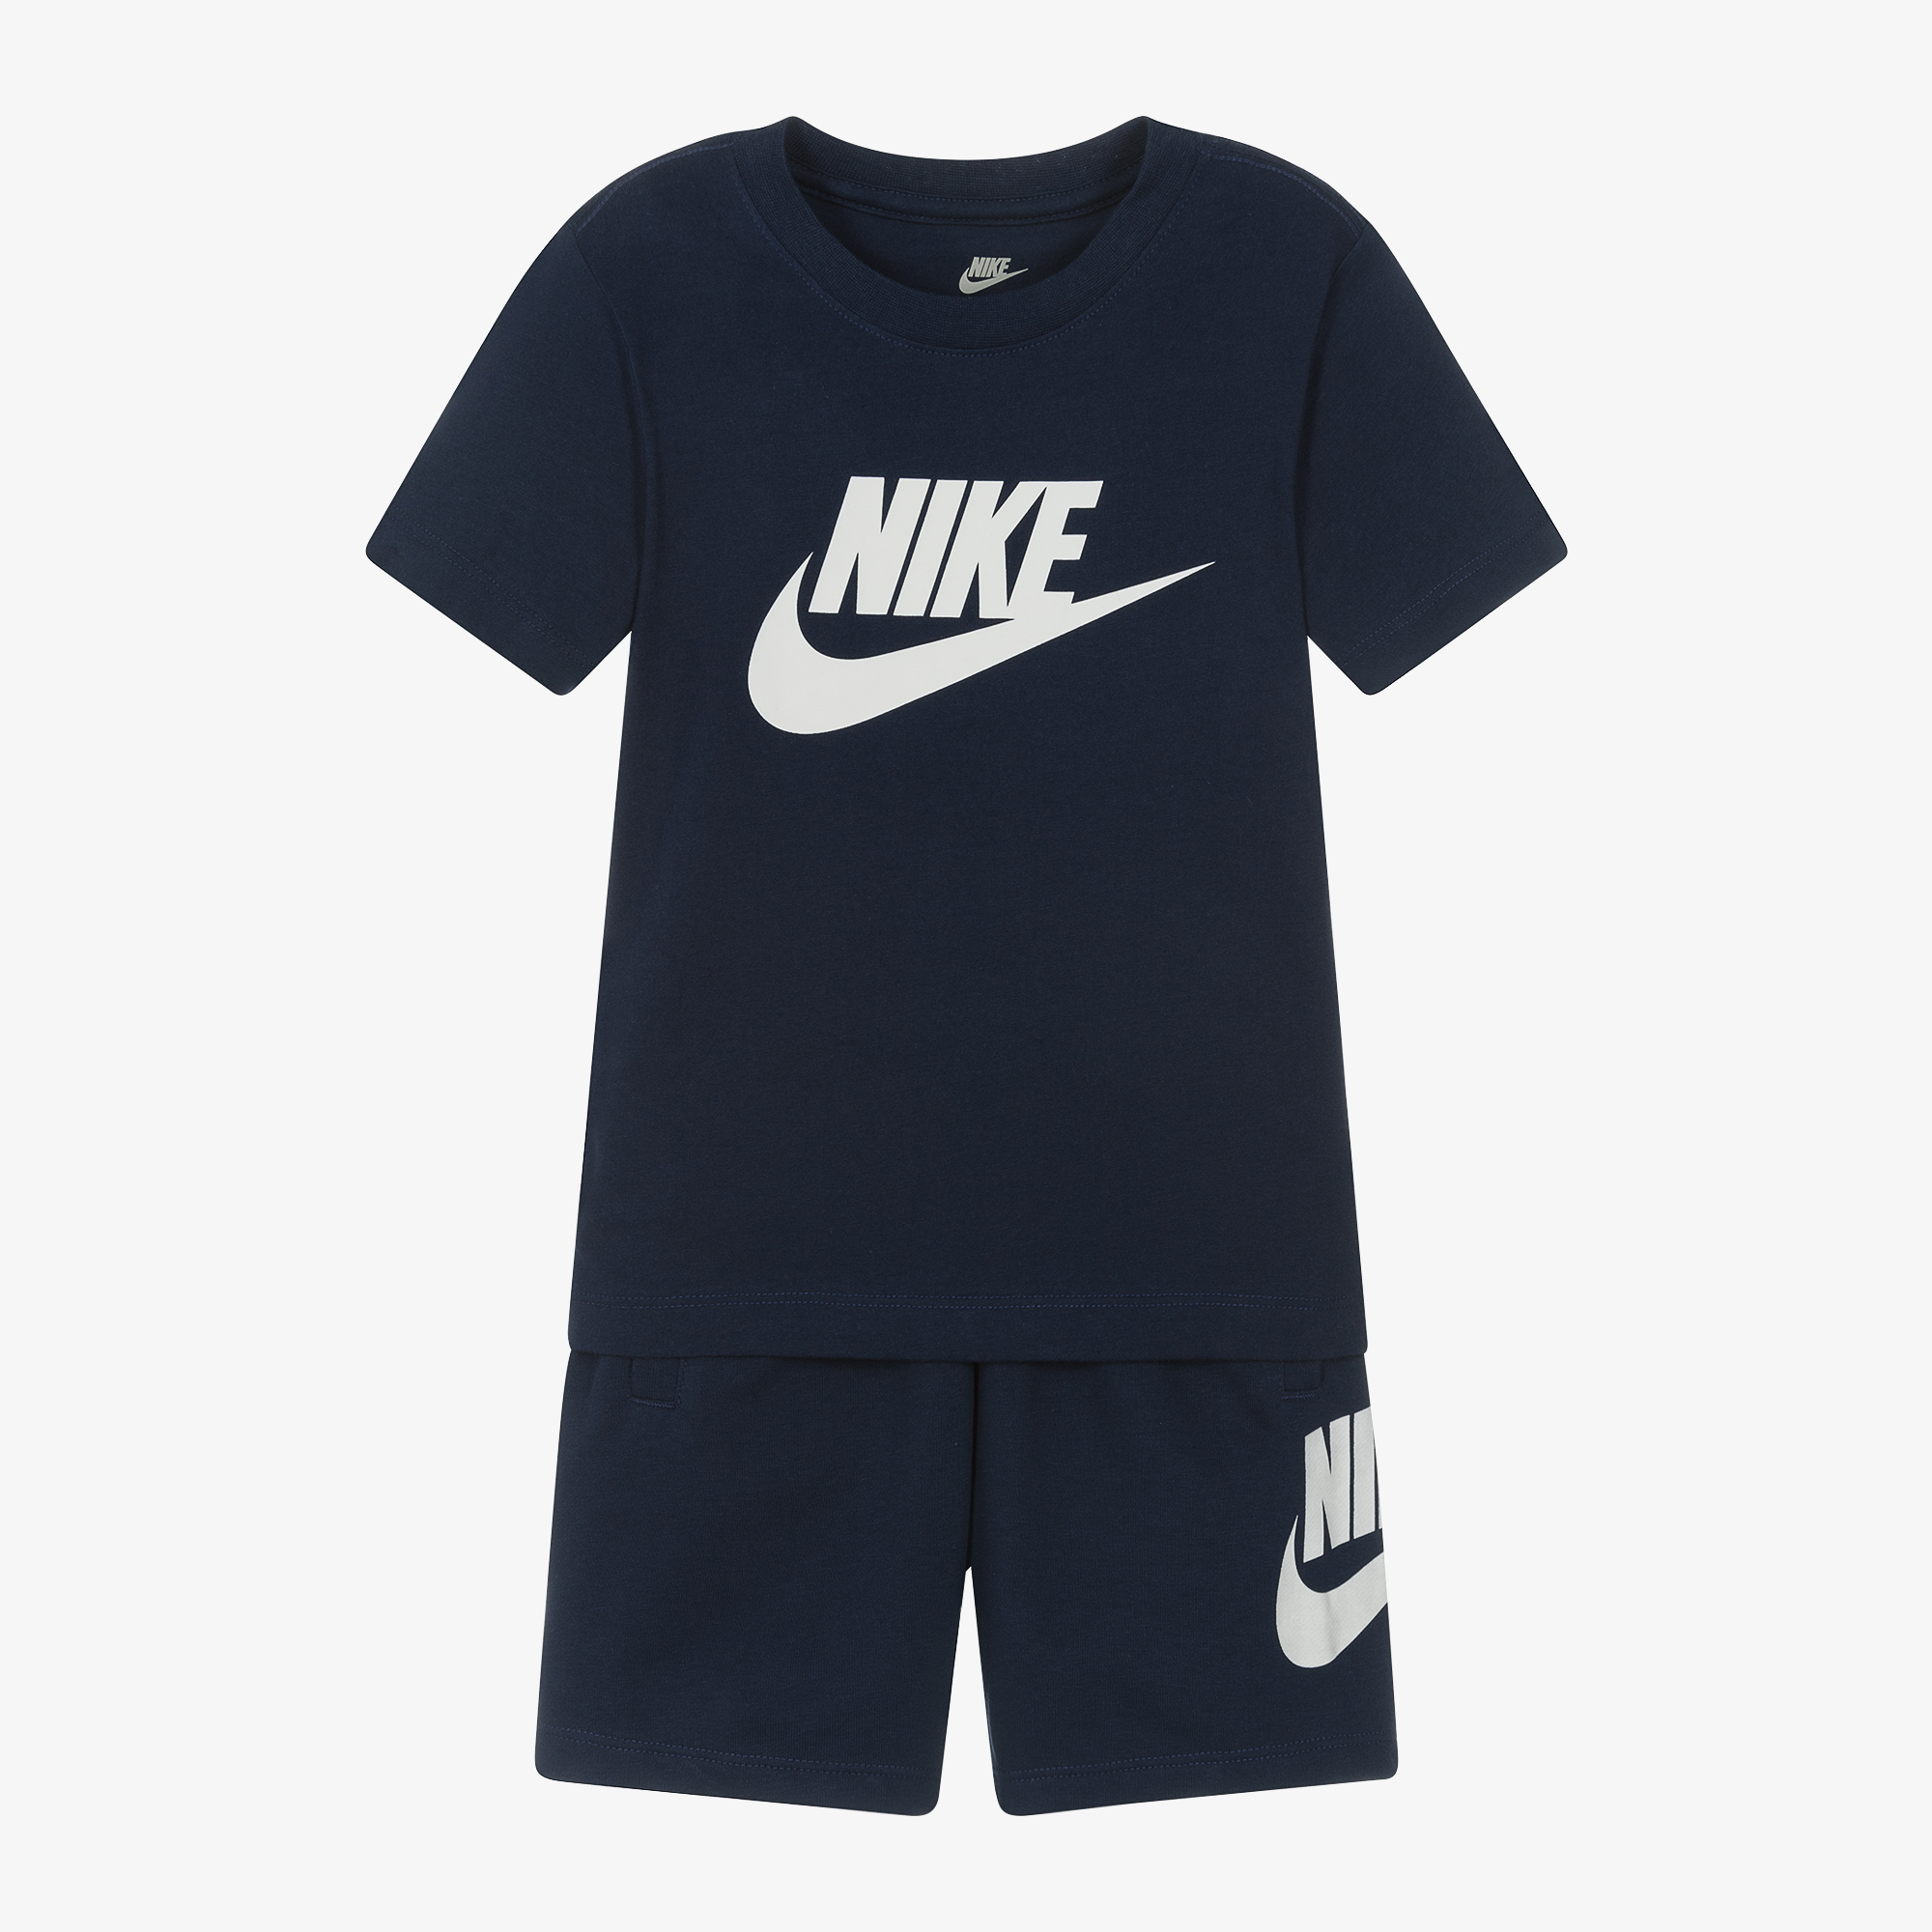 Nike - Boys Navy Blue Cotton Swoosh Shorts Set